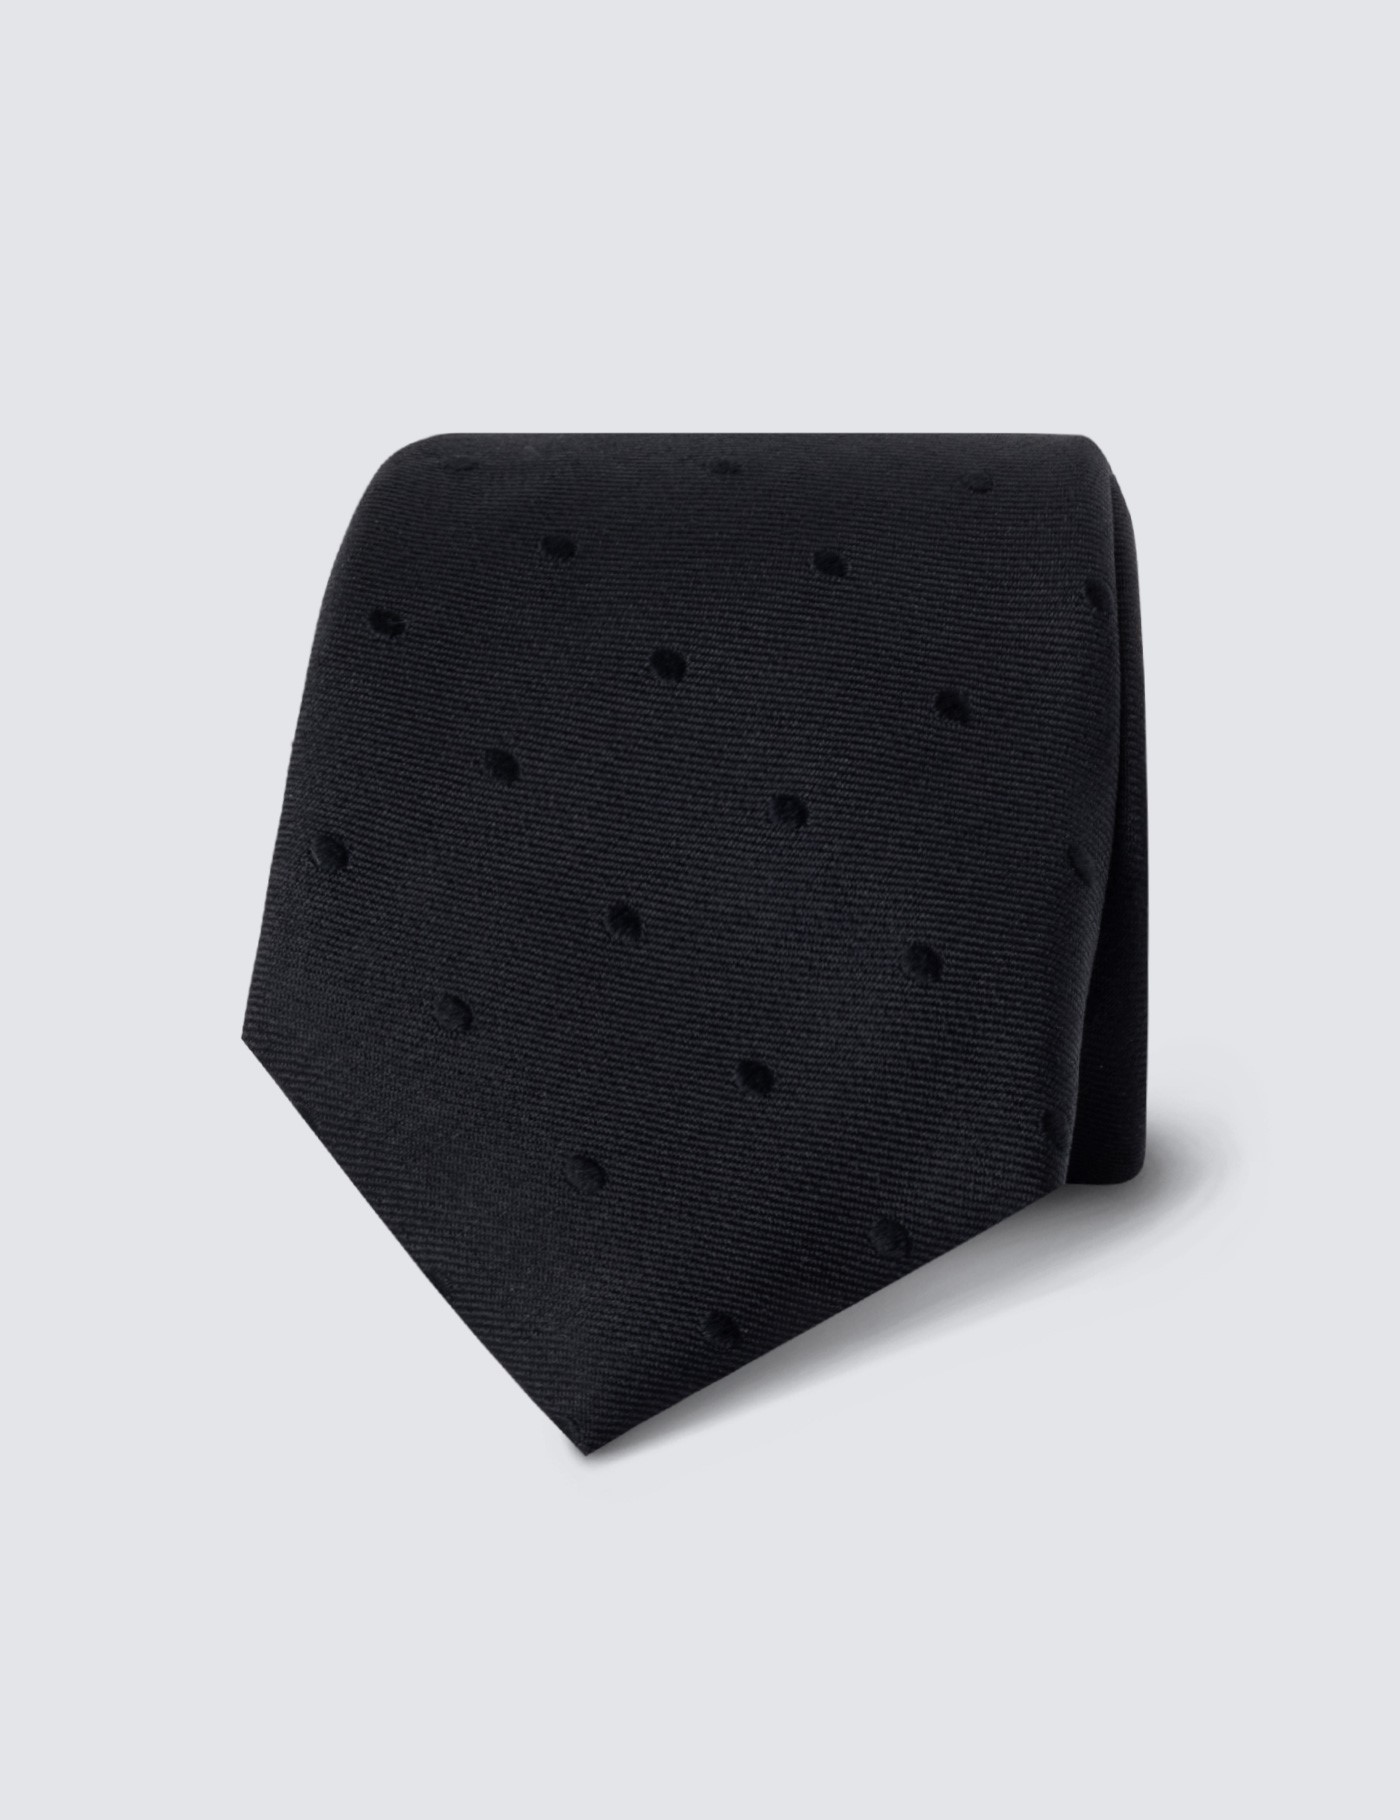 hawes & curtis men's black spots tie - 100% silk